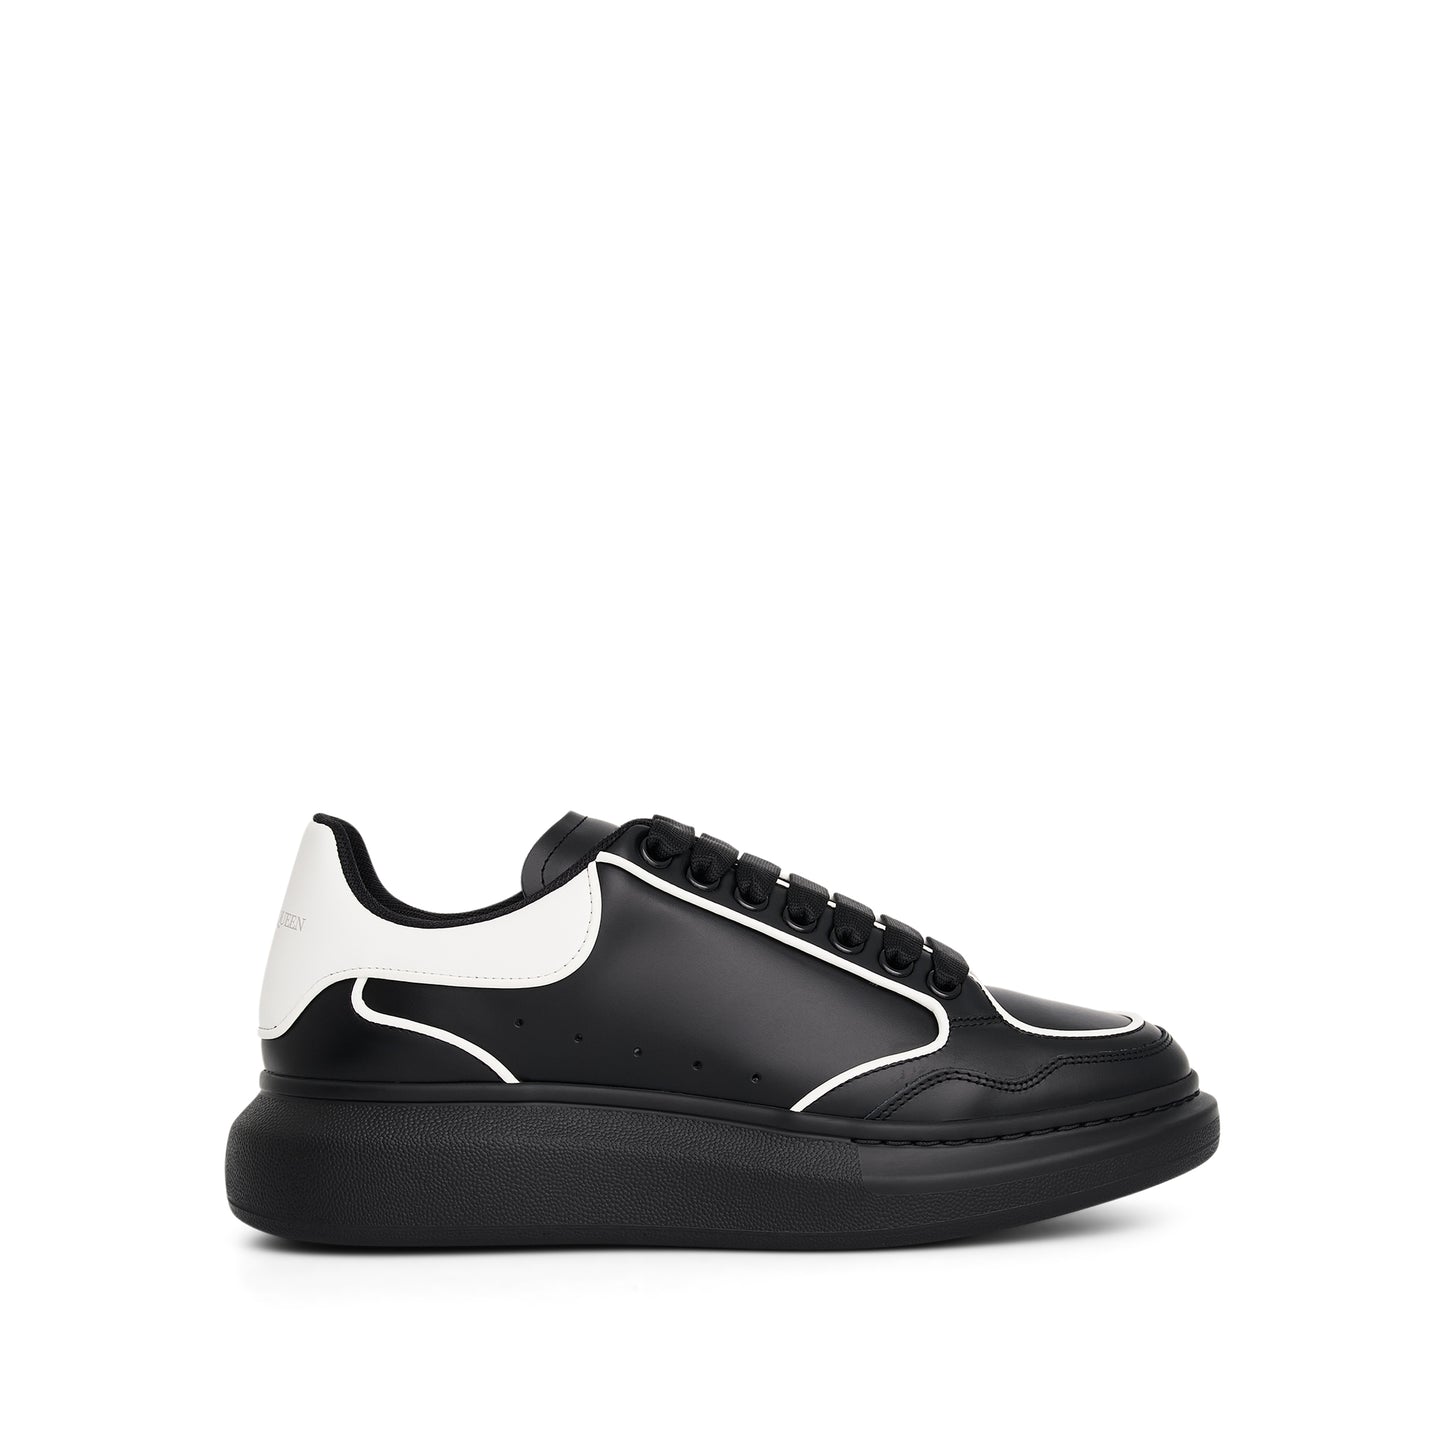 Larry Contrast Sneaker in Black/White